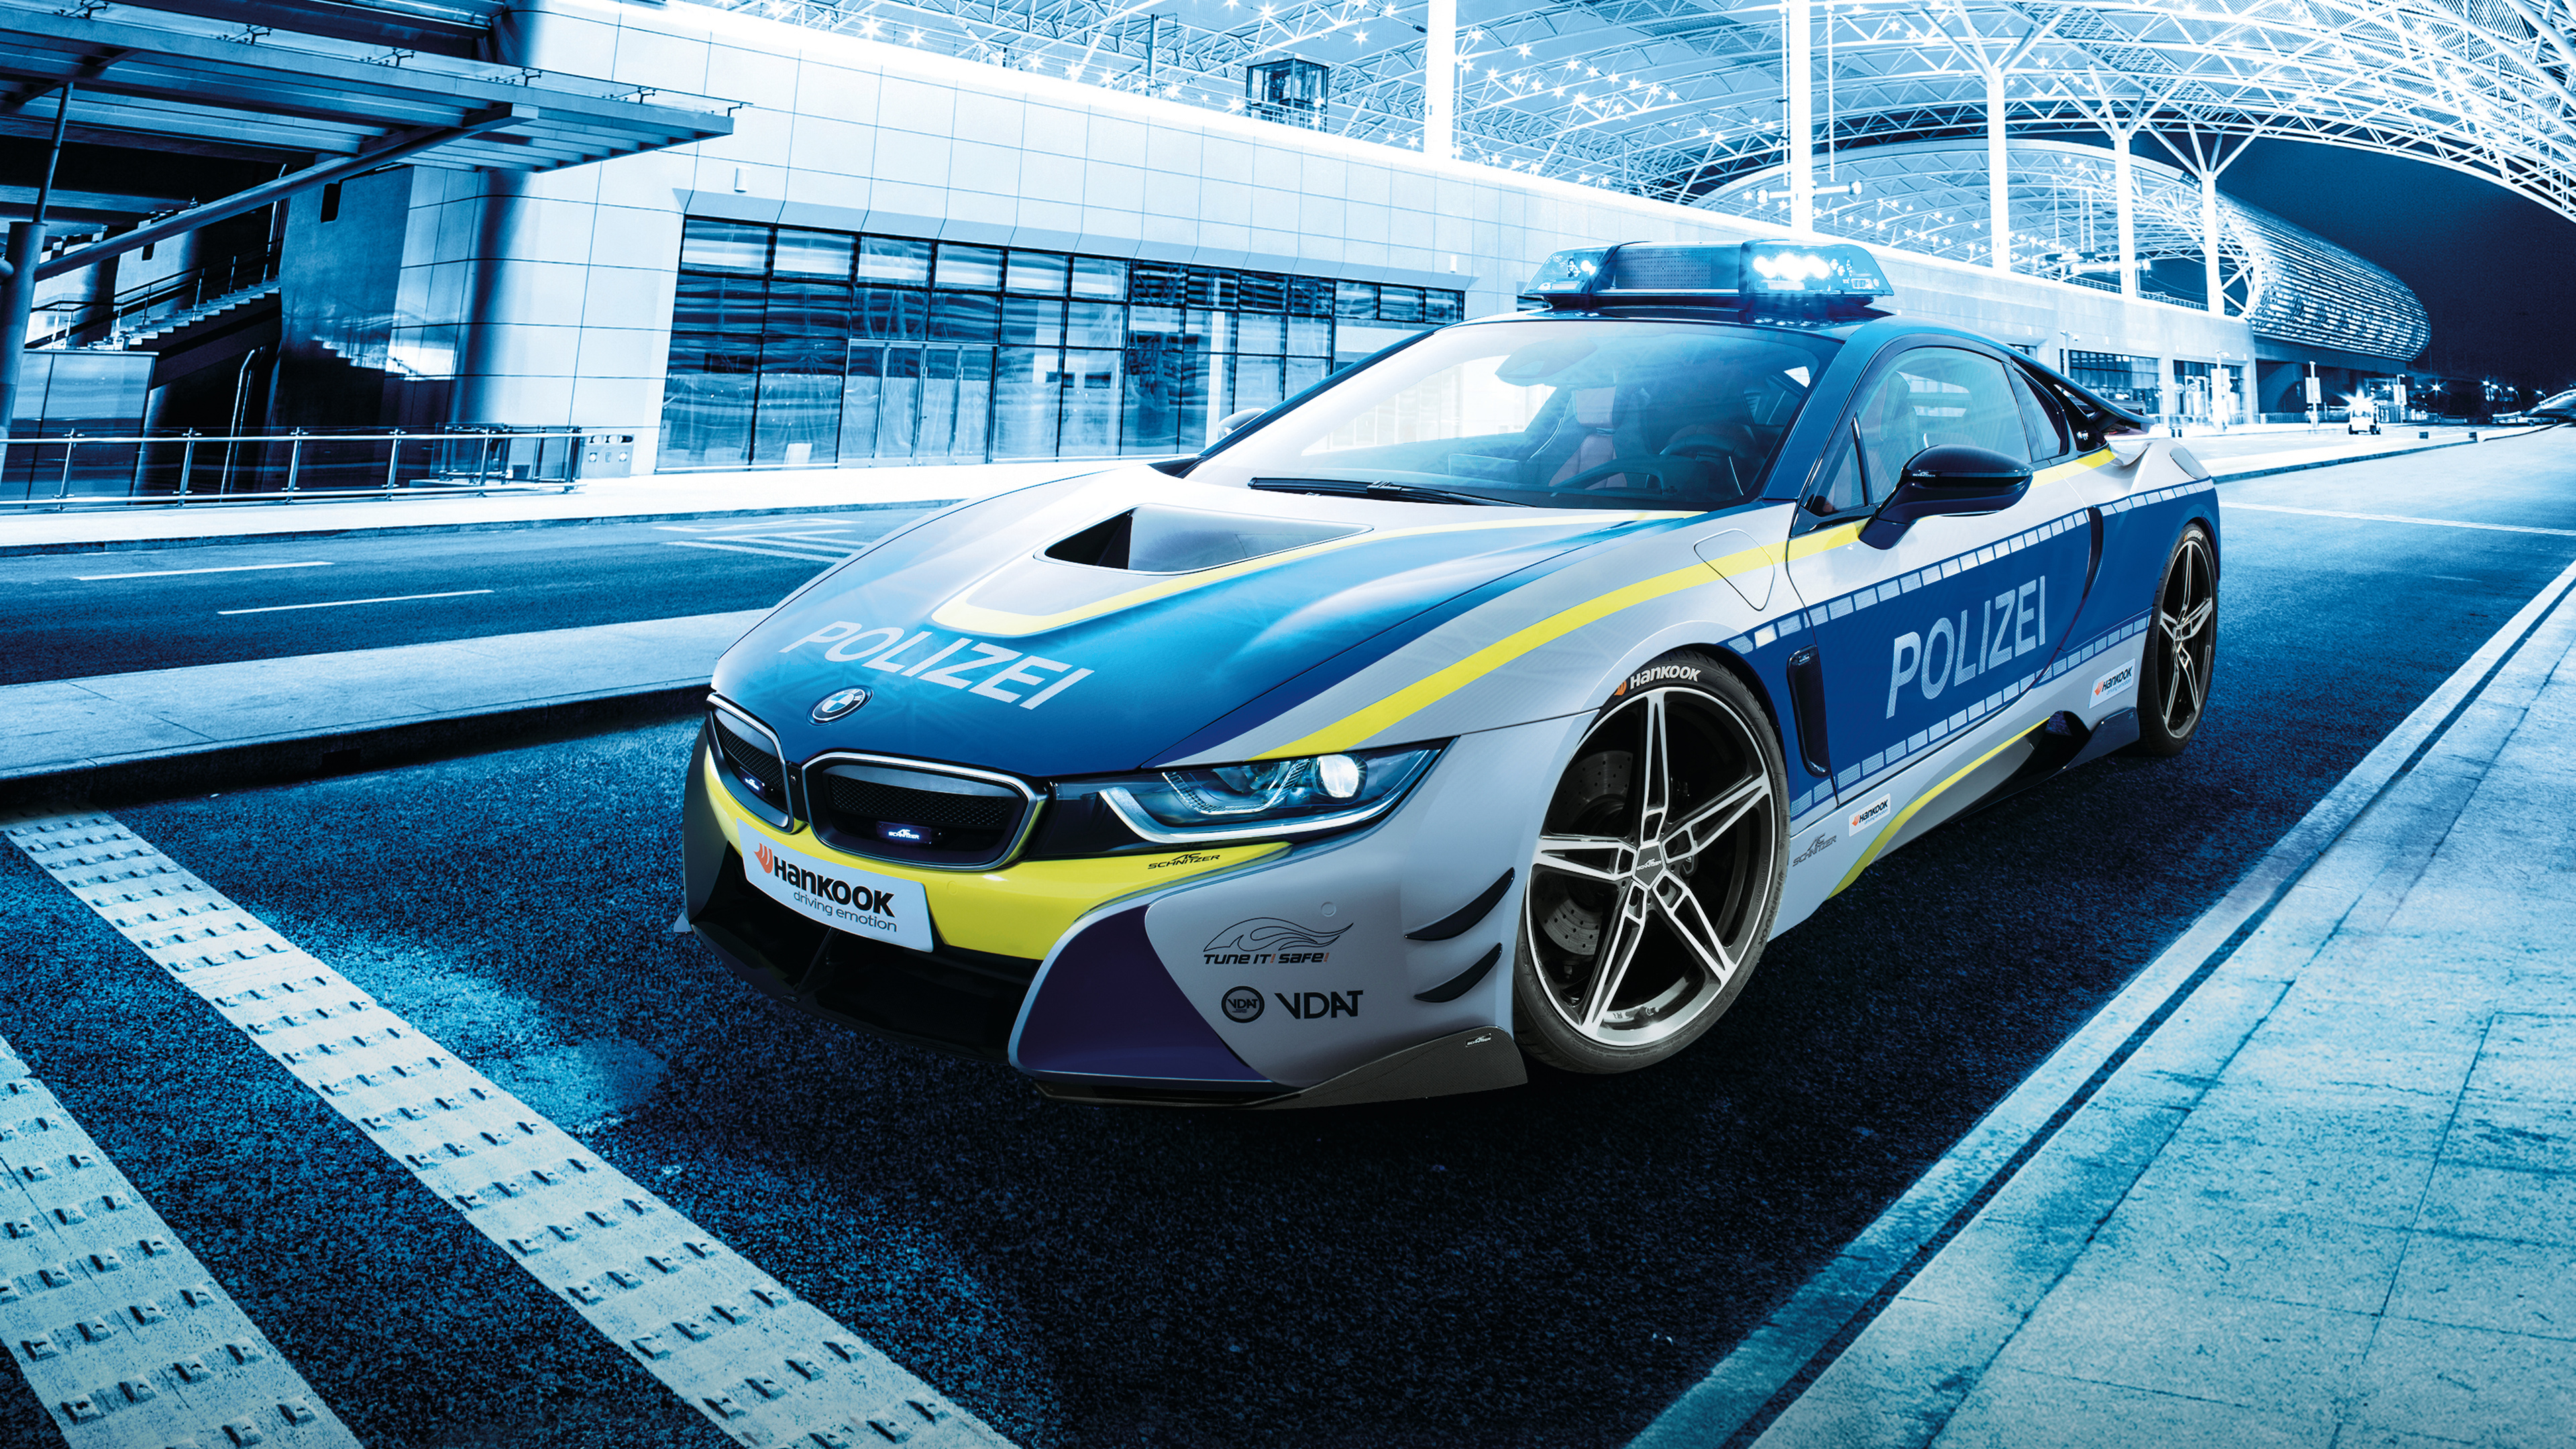 AC Schnitzer BMW i8 Polizei Tune it Safe Concept 2019 4K Wallpapers